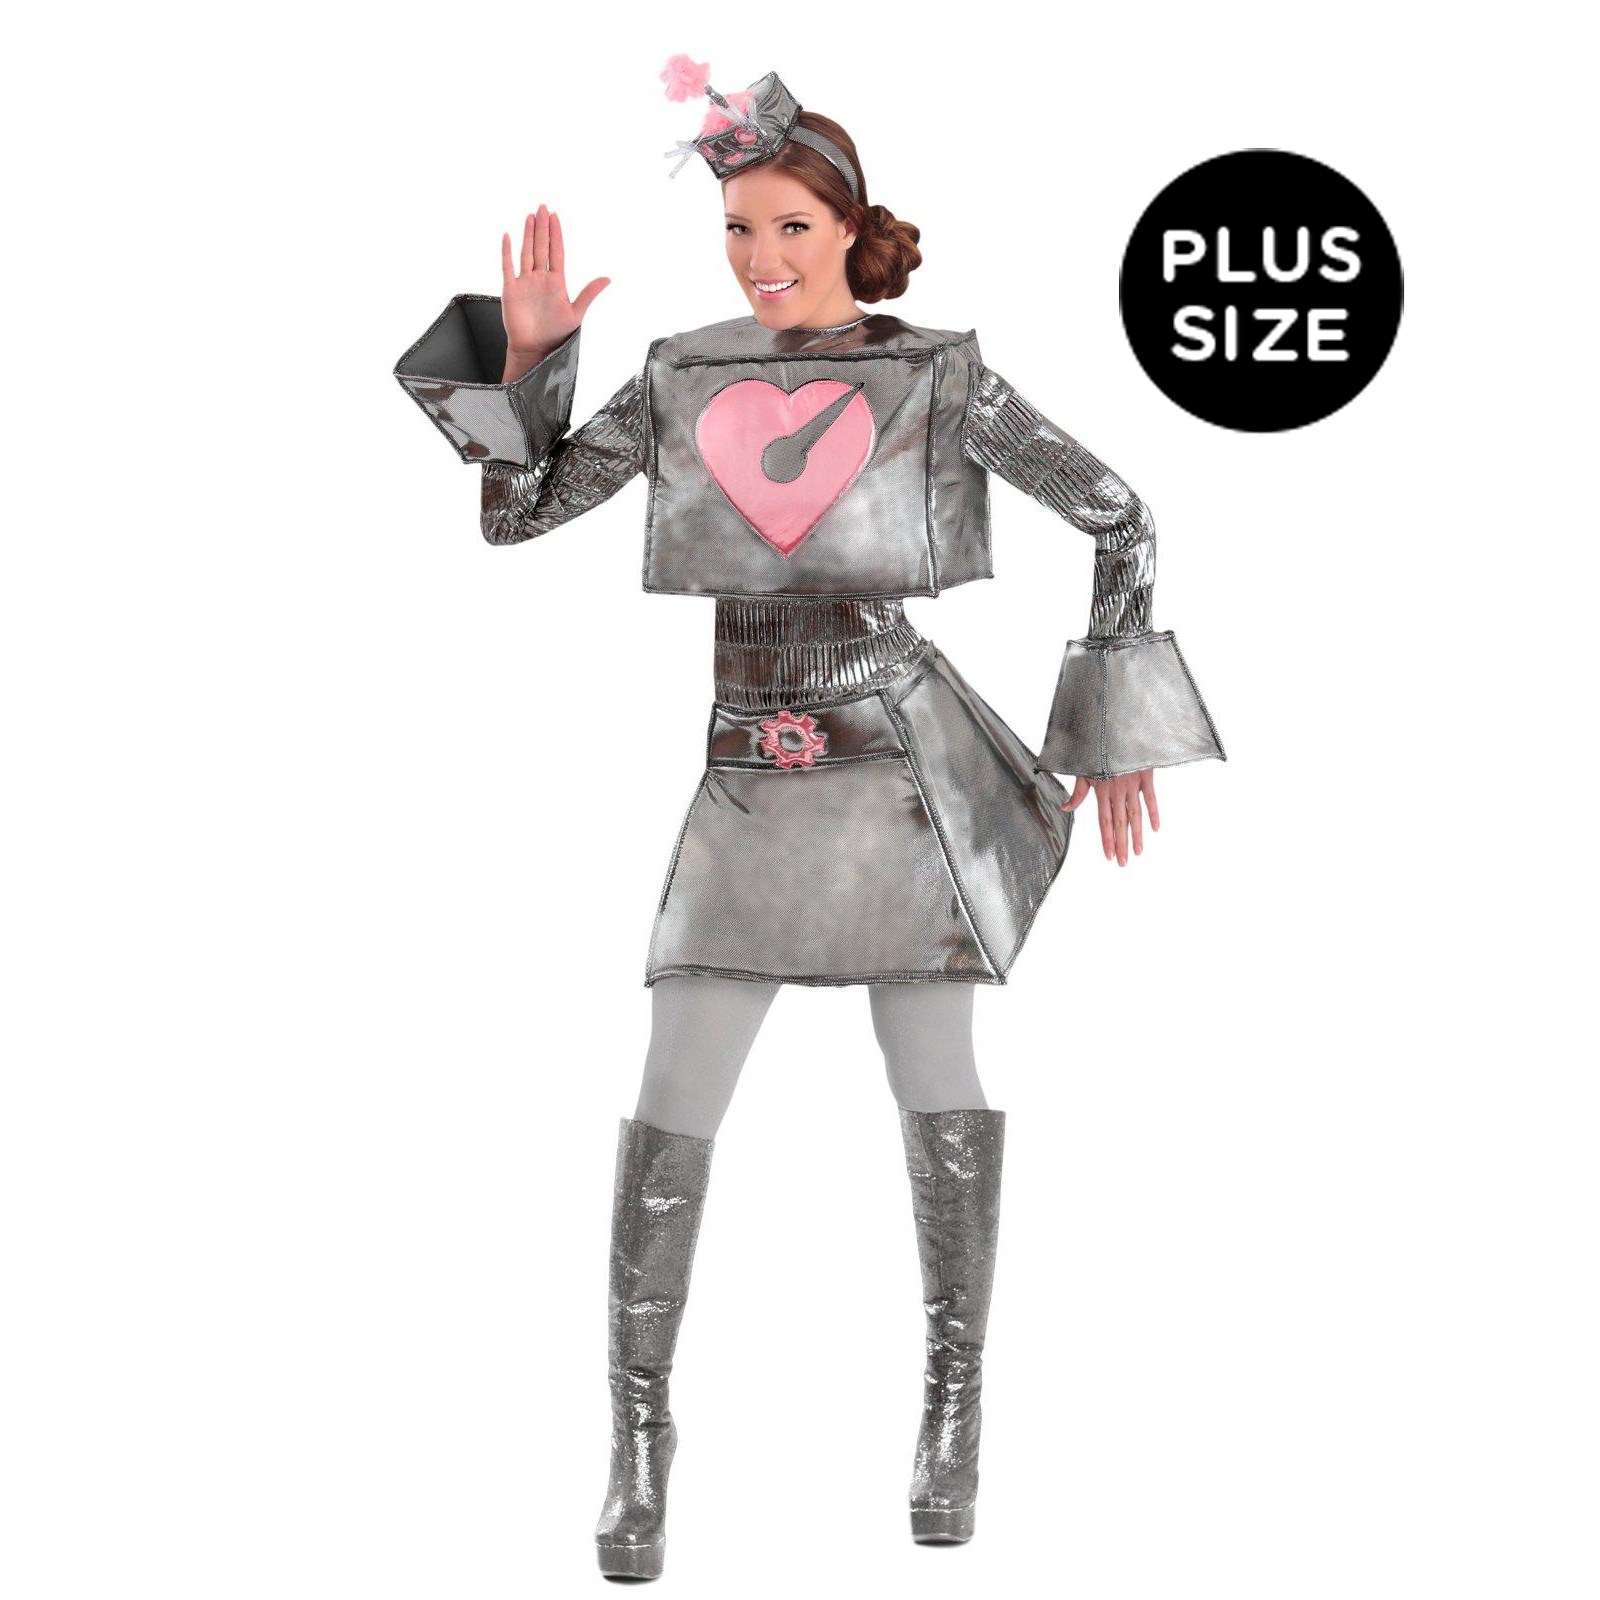 Robot Woman Costume - Adult Plus Size